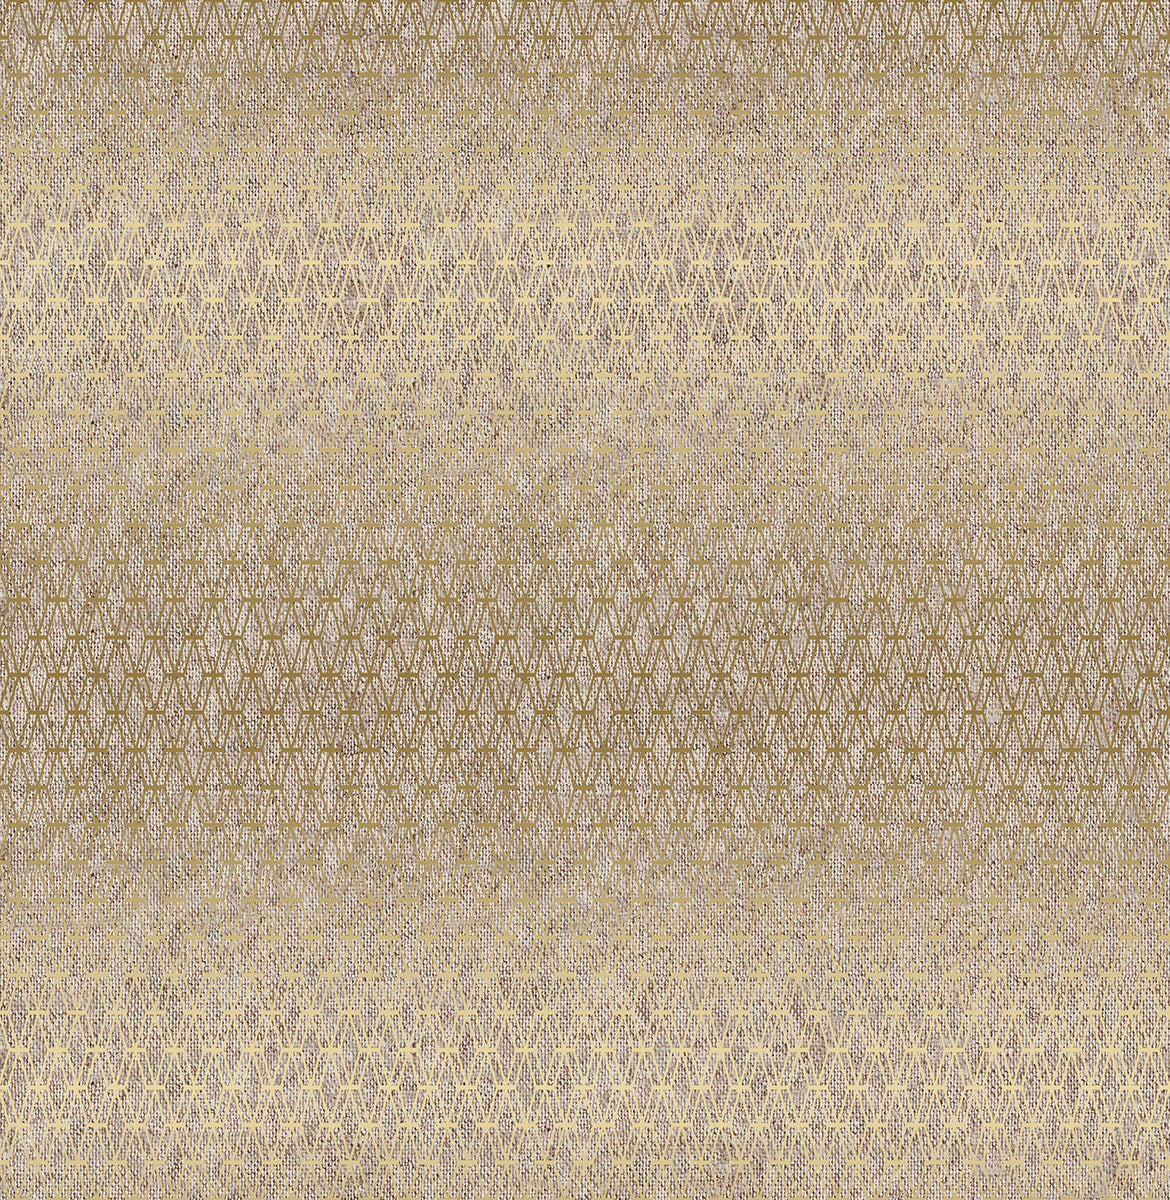 Cotton + Steel Basics Canvas Fabric - Mishmesh in Goldie Gold Metallic - CS102-GO10CM